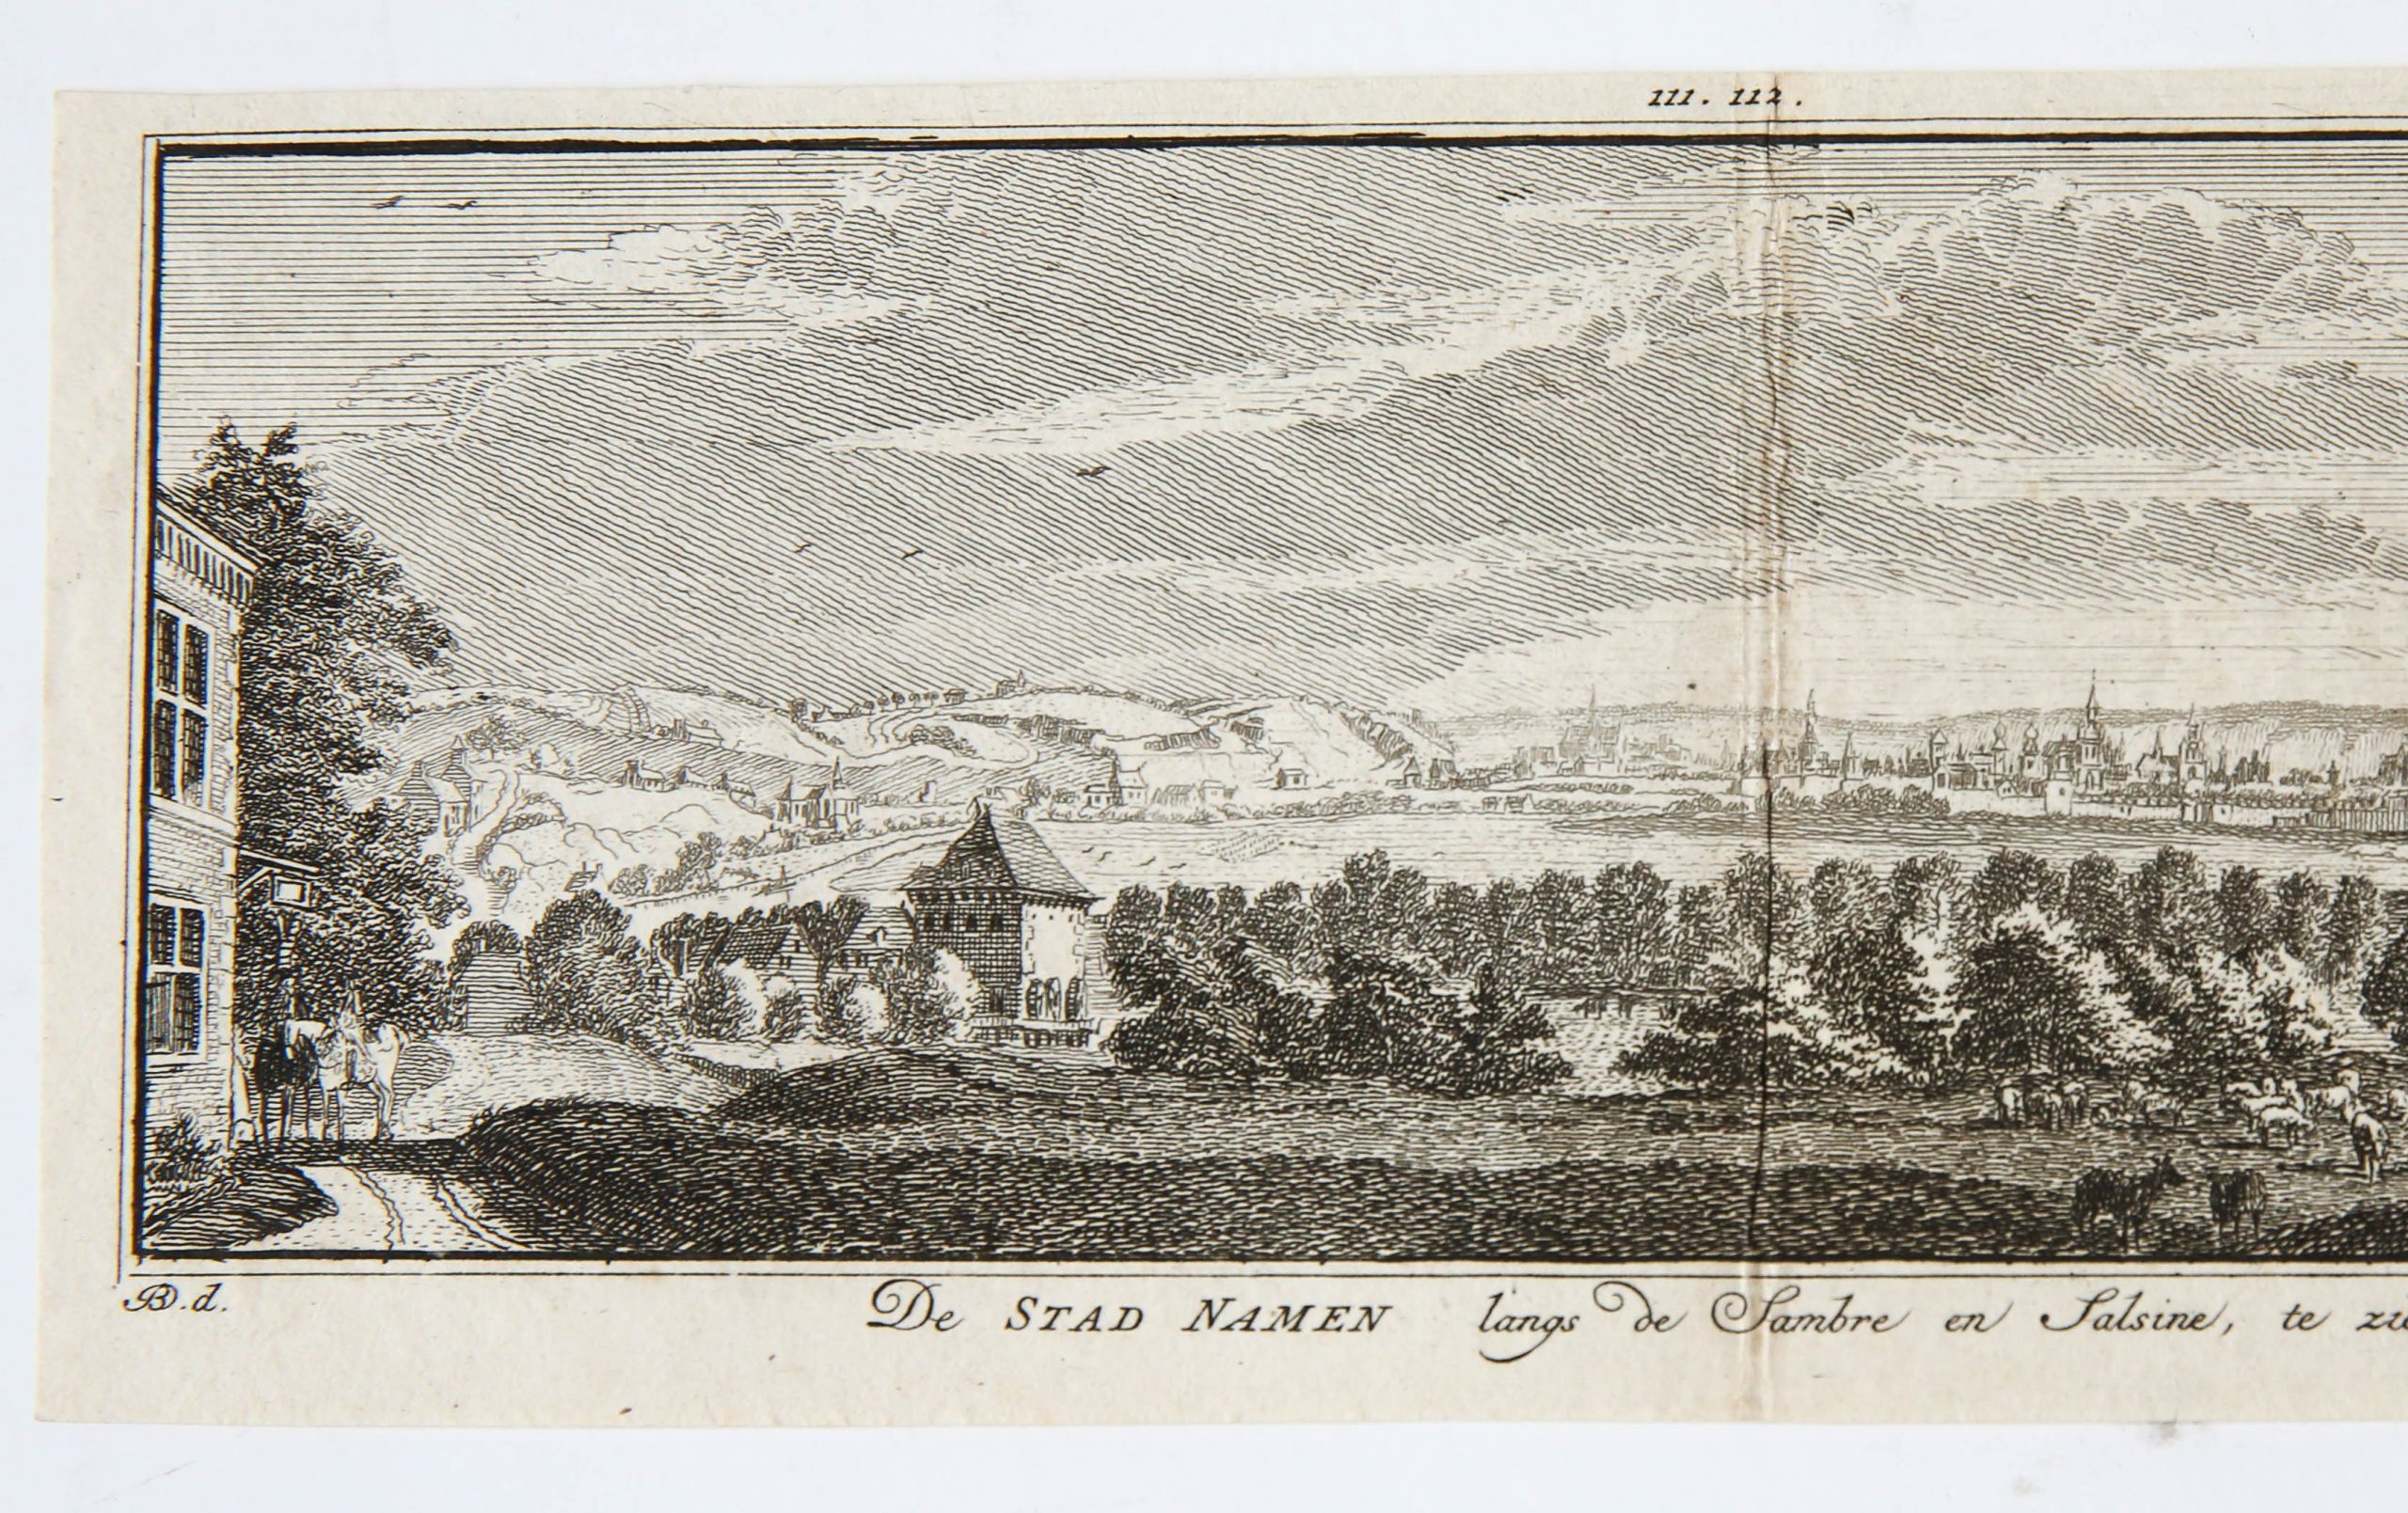 [City view Namen/stadgezicht Namen, Namur, België] De STAD NAMEN langs de Sambre en Salsine, te zien 1740 (Namur).